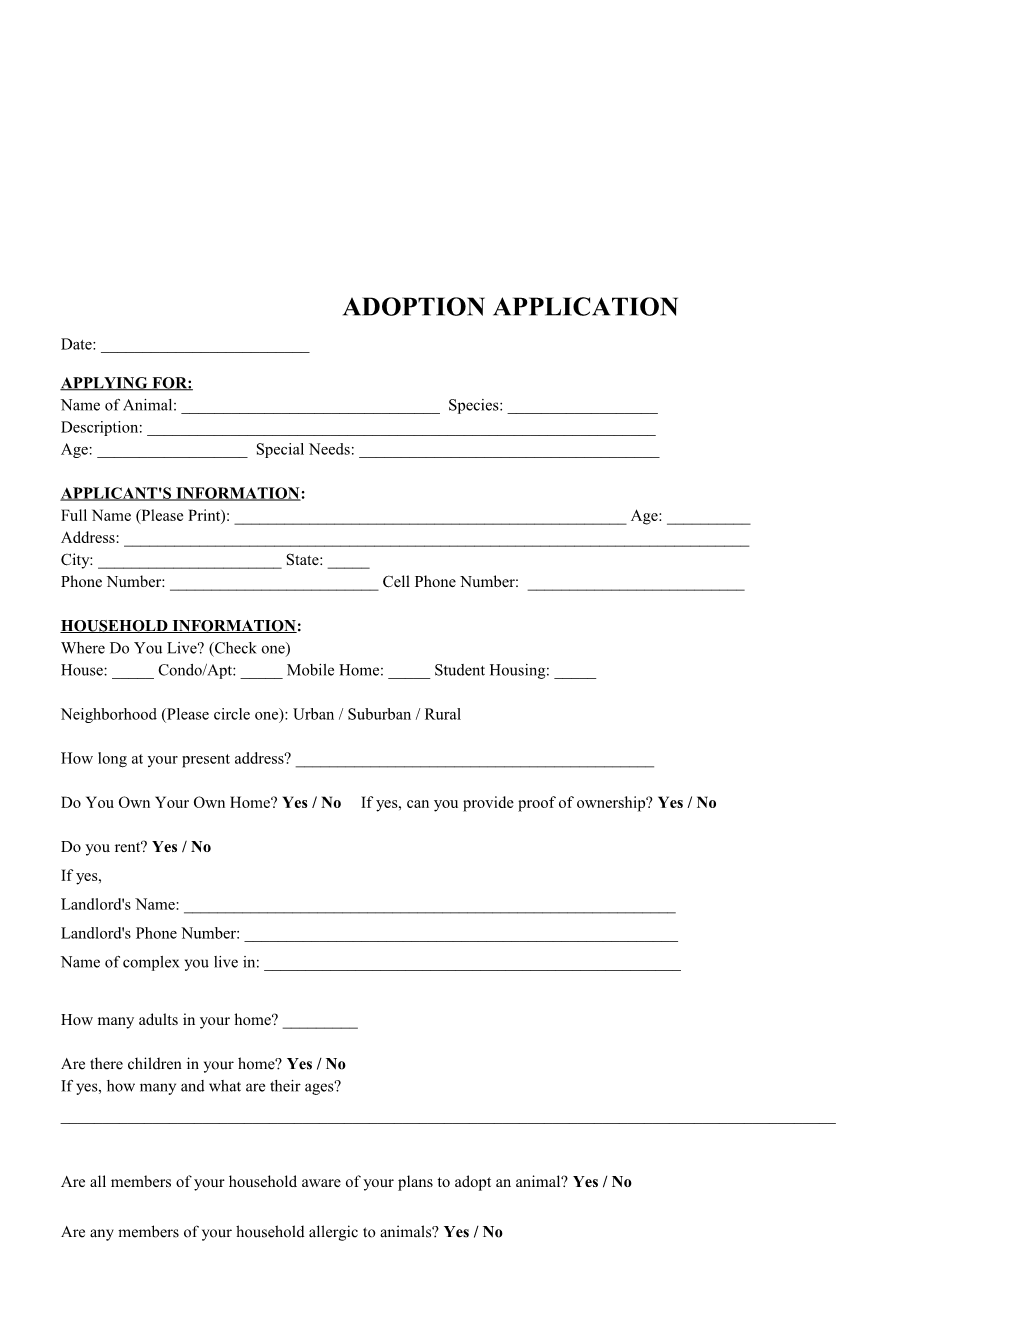 Adoption Application s2